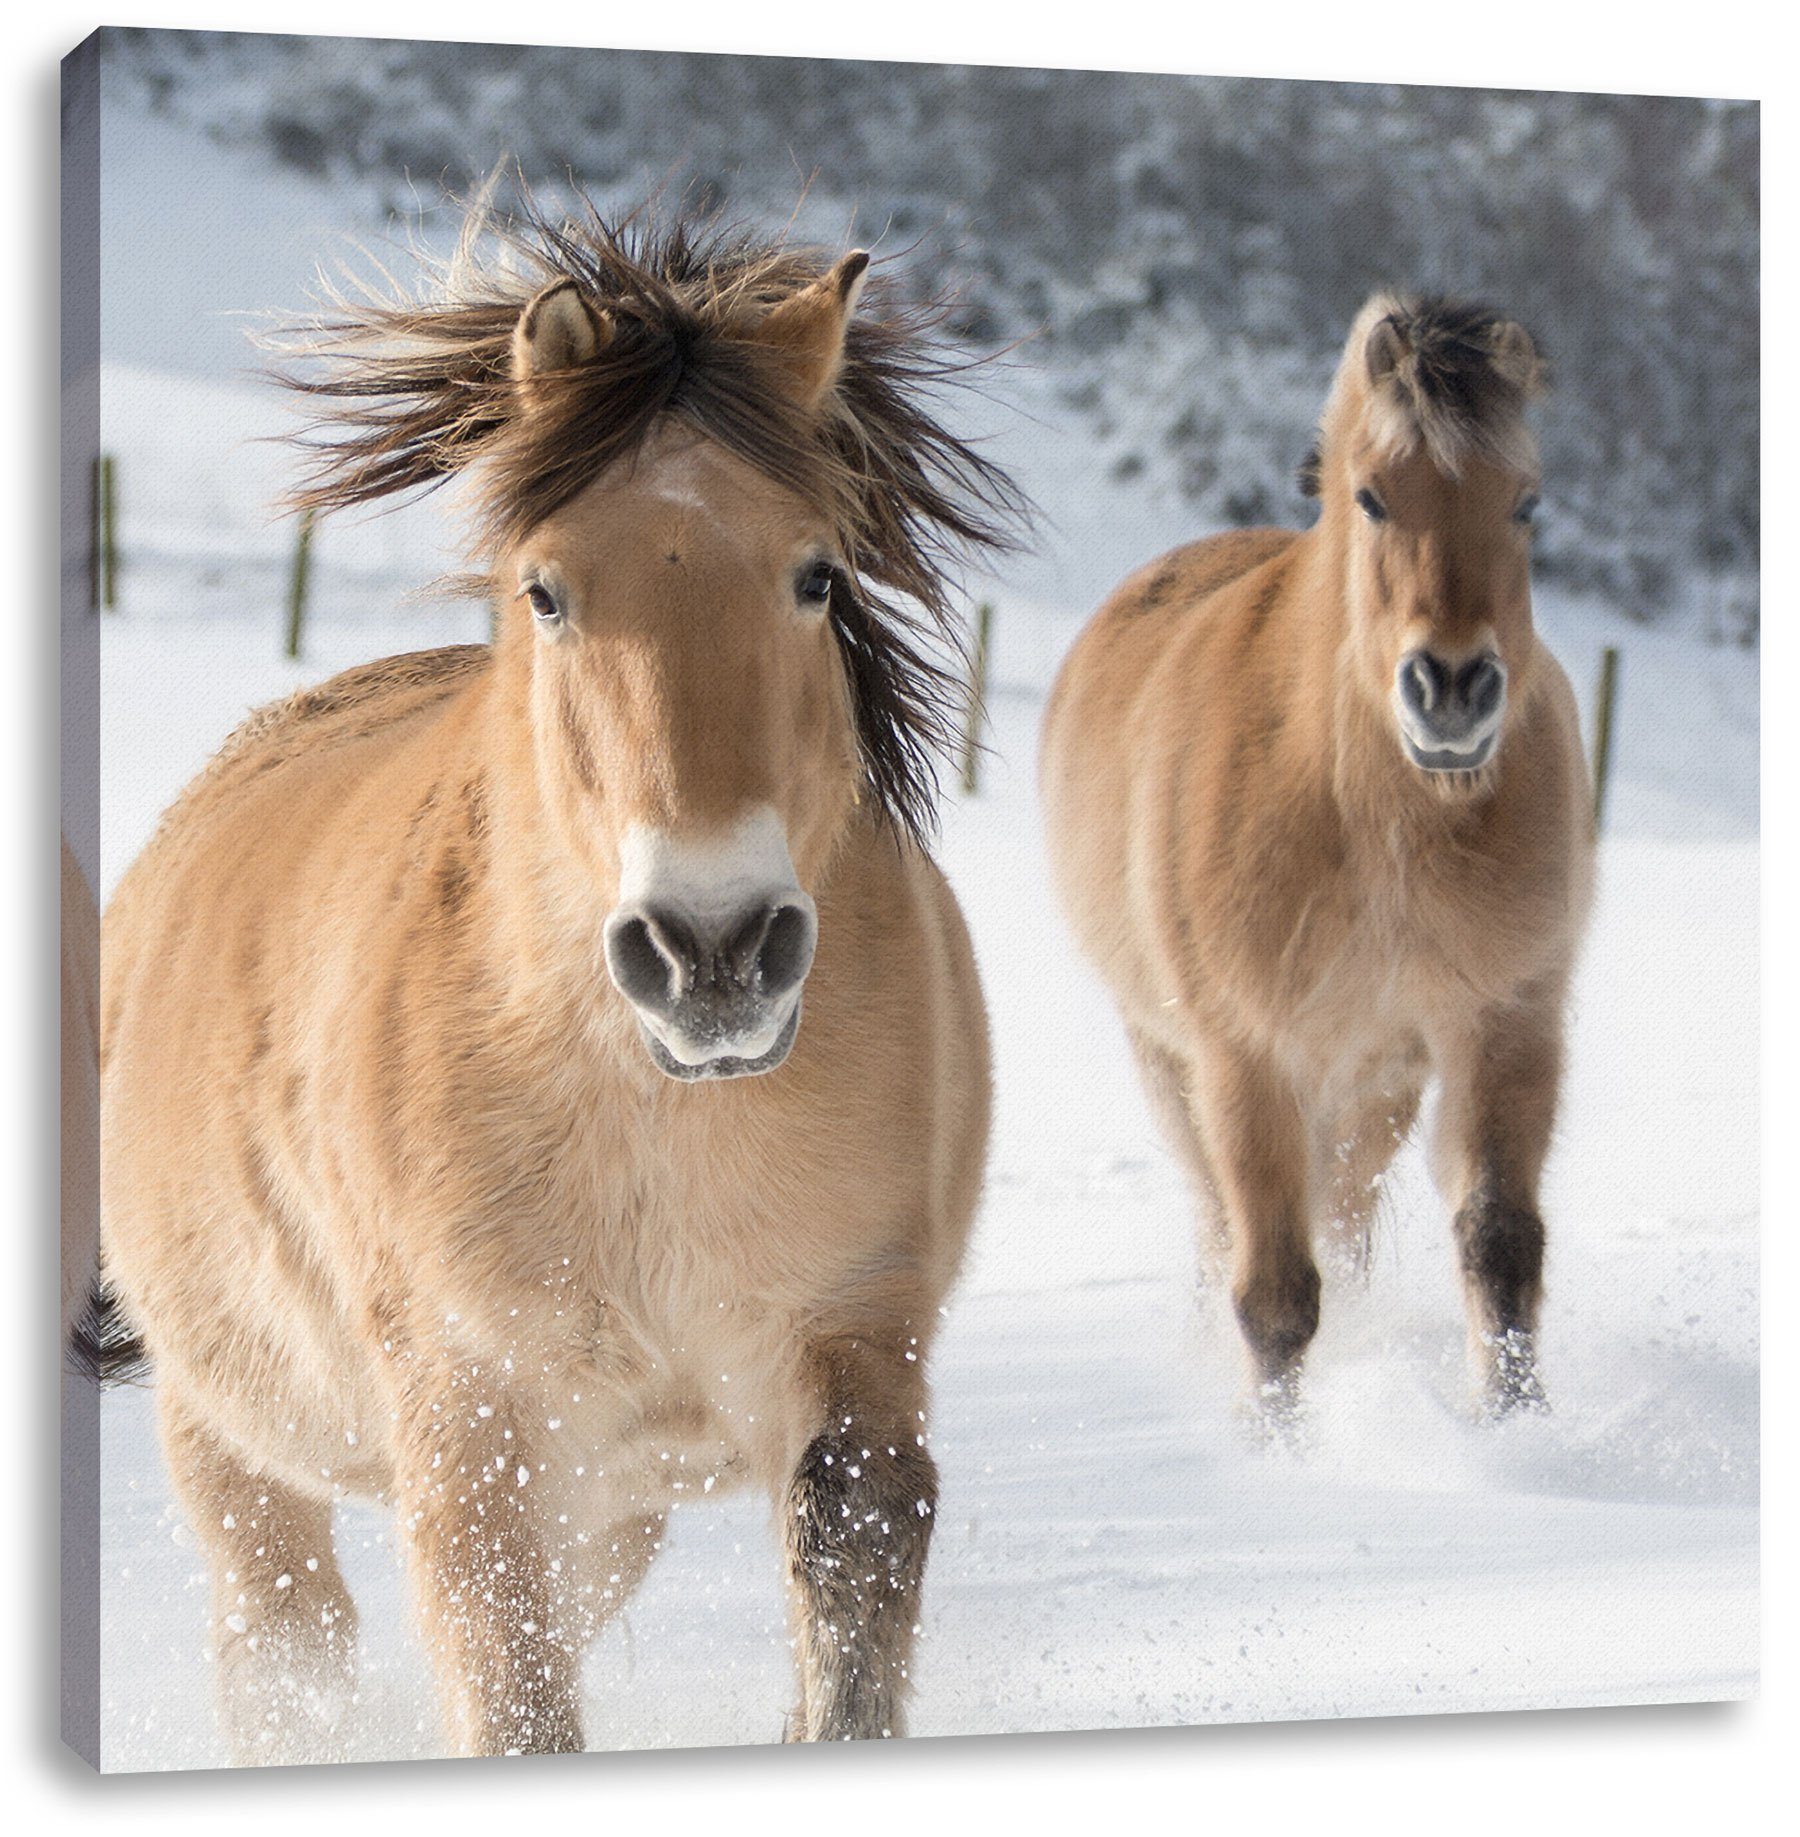 Pixxprint Leinwandbild Pferd im im Schnee (1 St), Zackenaufhänger fertig bespannt, Leinwandbild Pferd inkl. Schnee